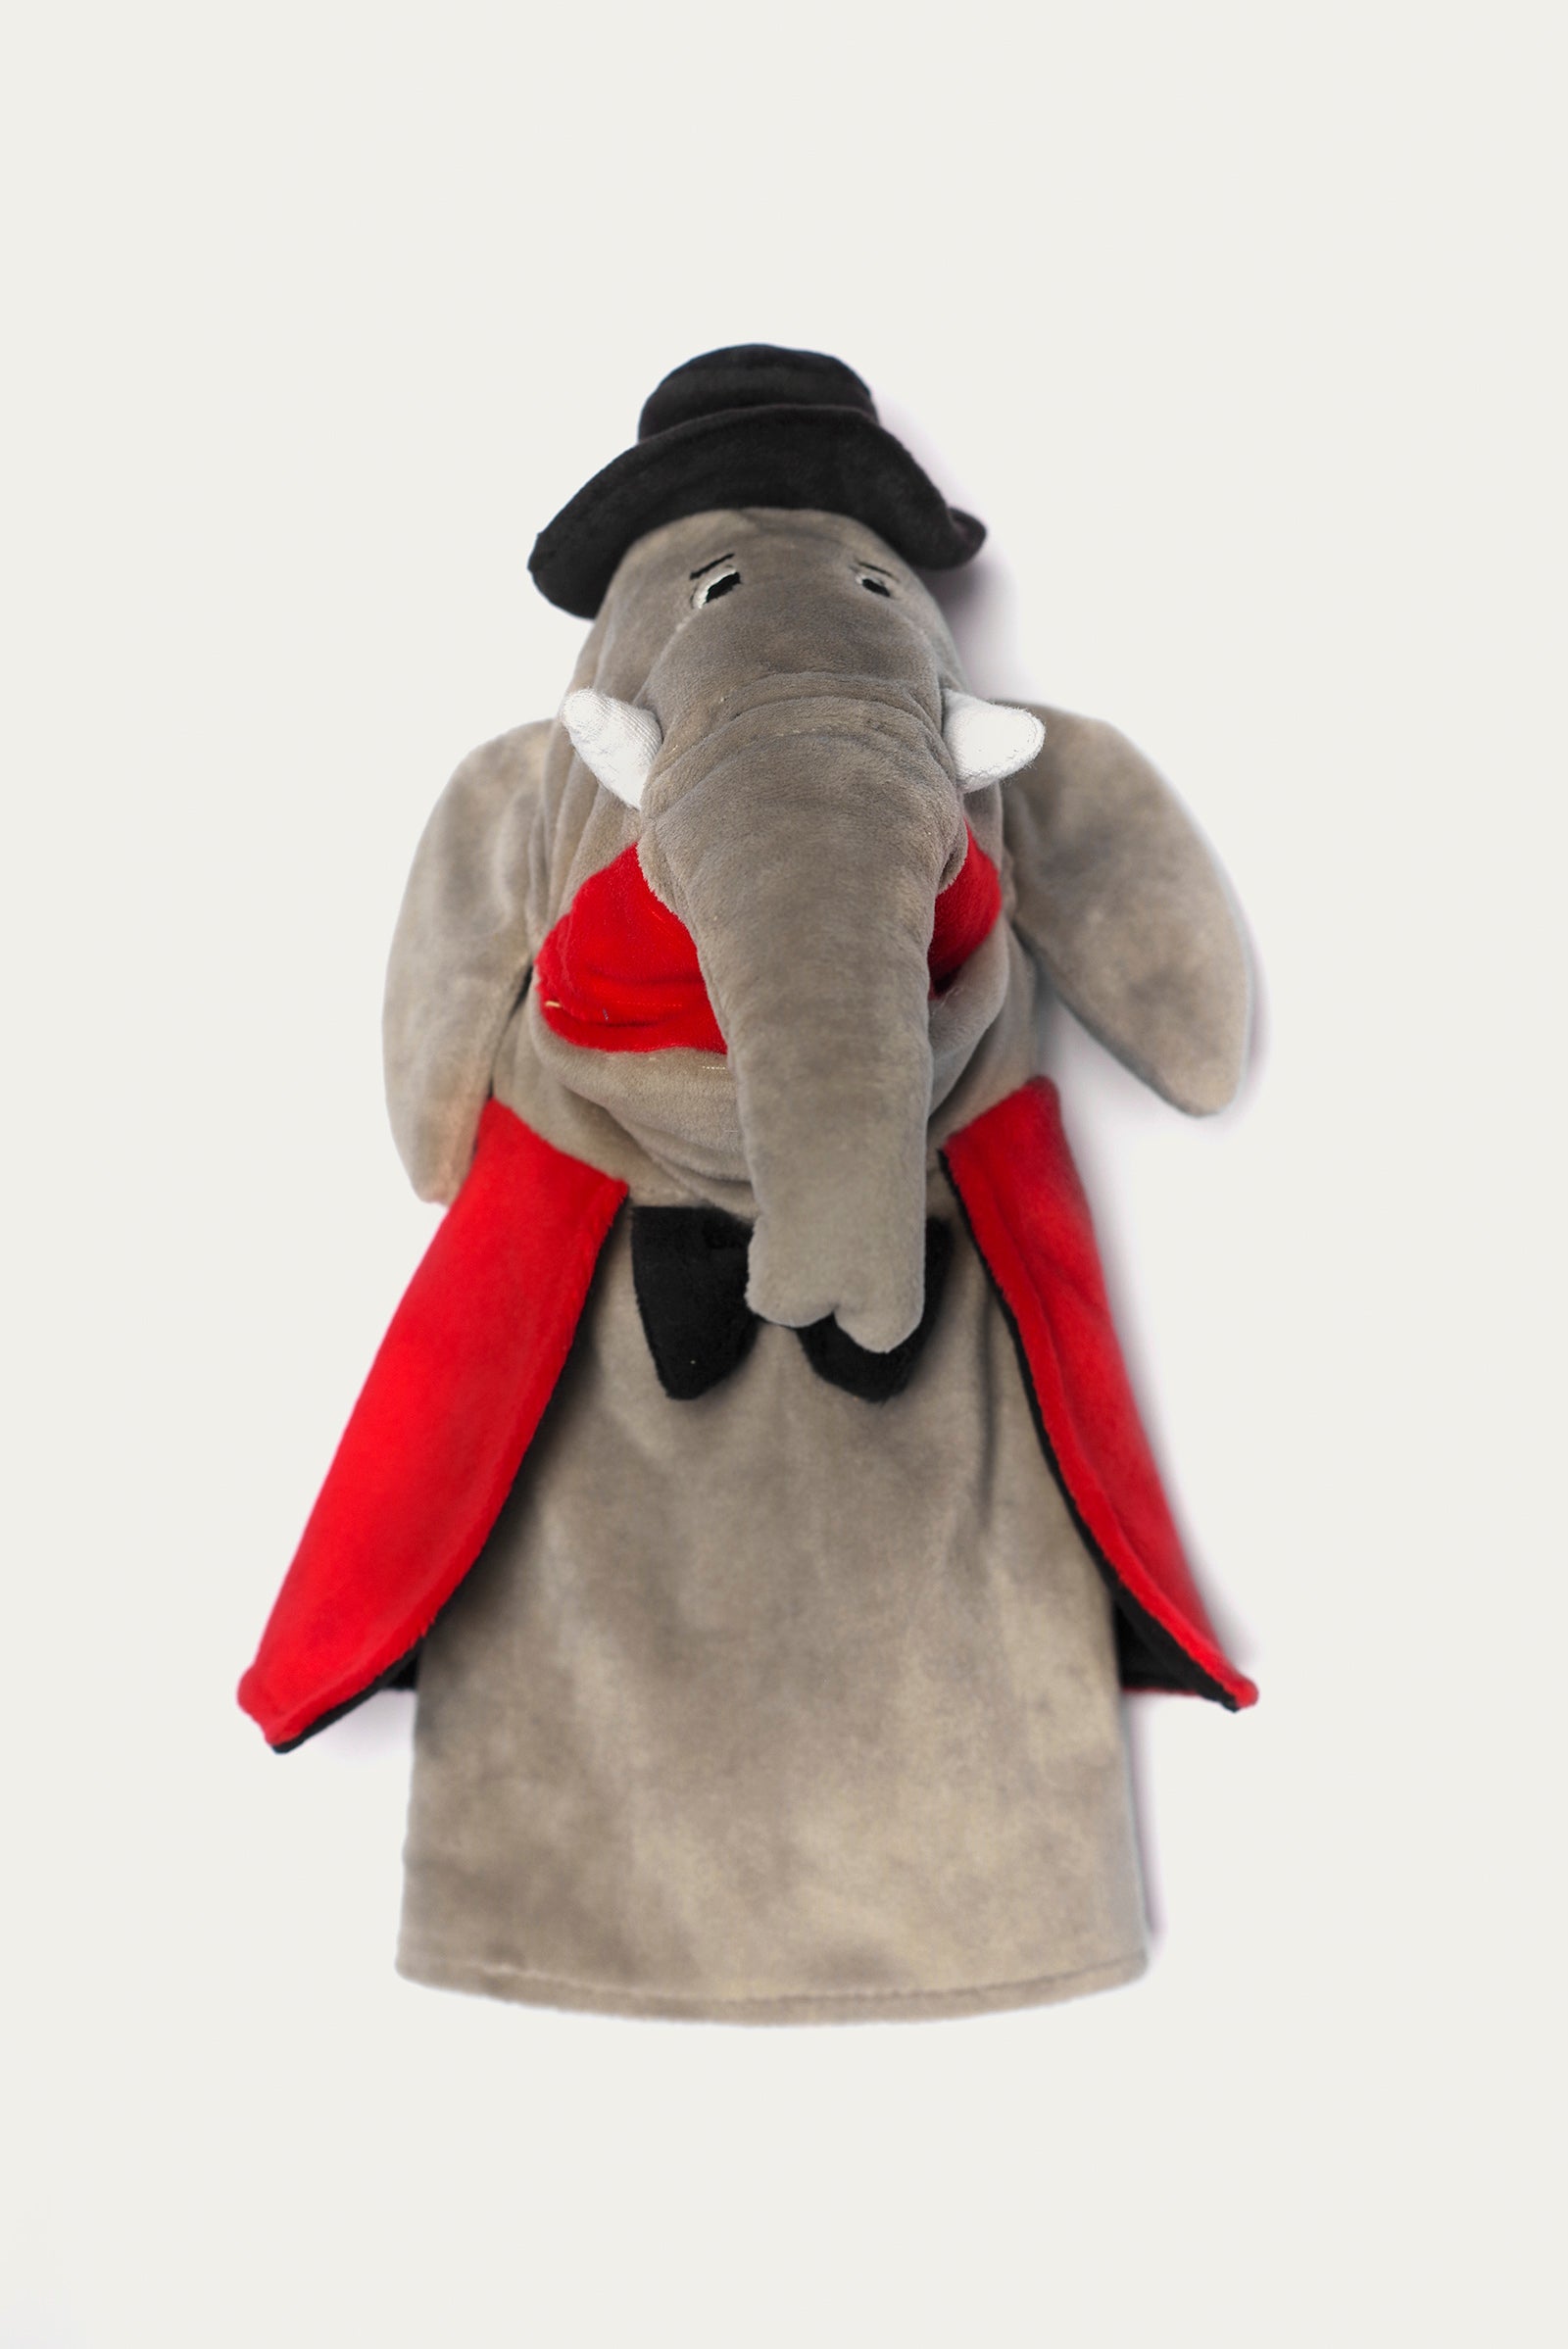 Elephant Puppet (Stuff Toy) (STY-1234)